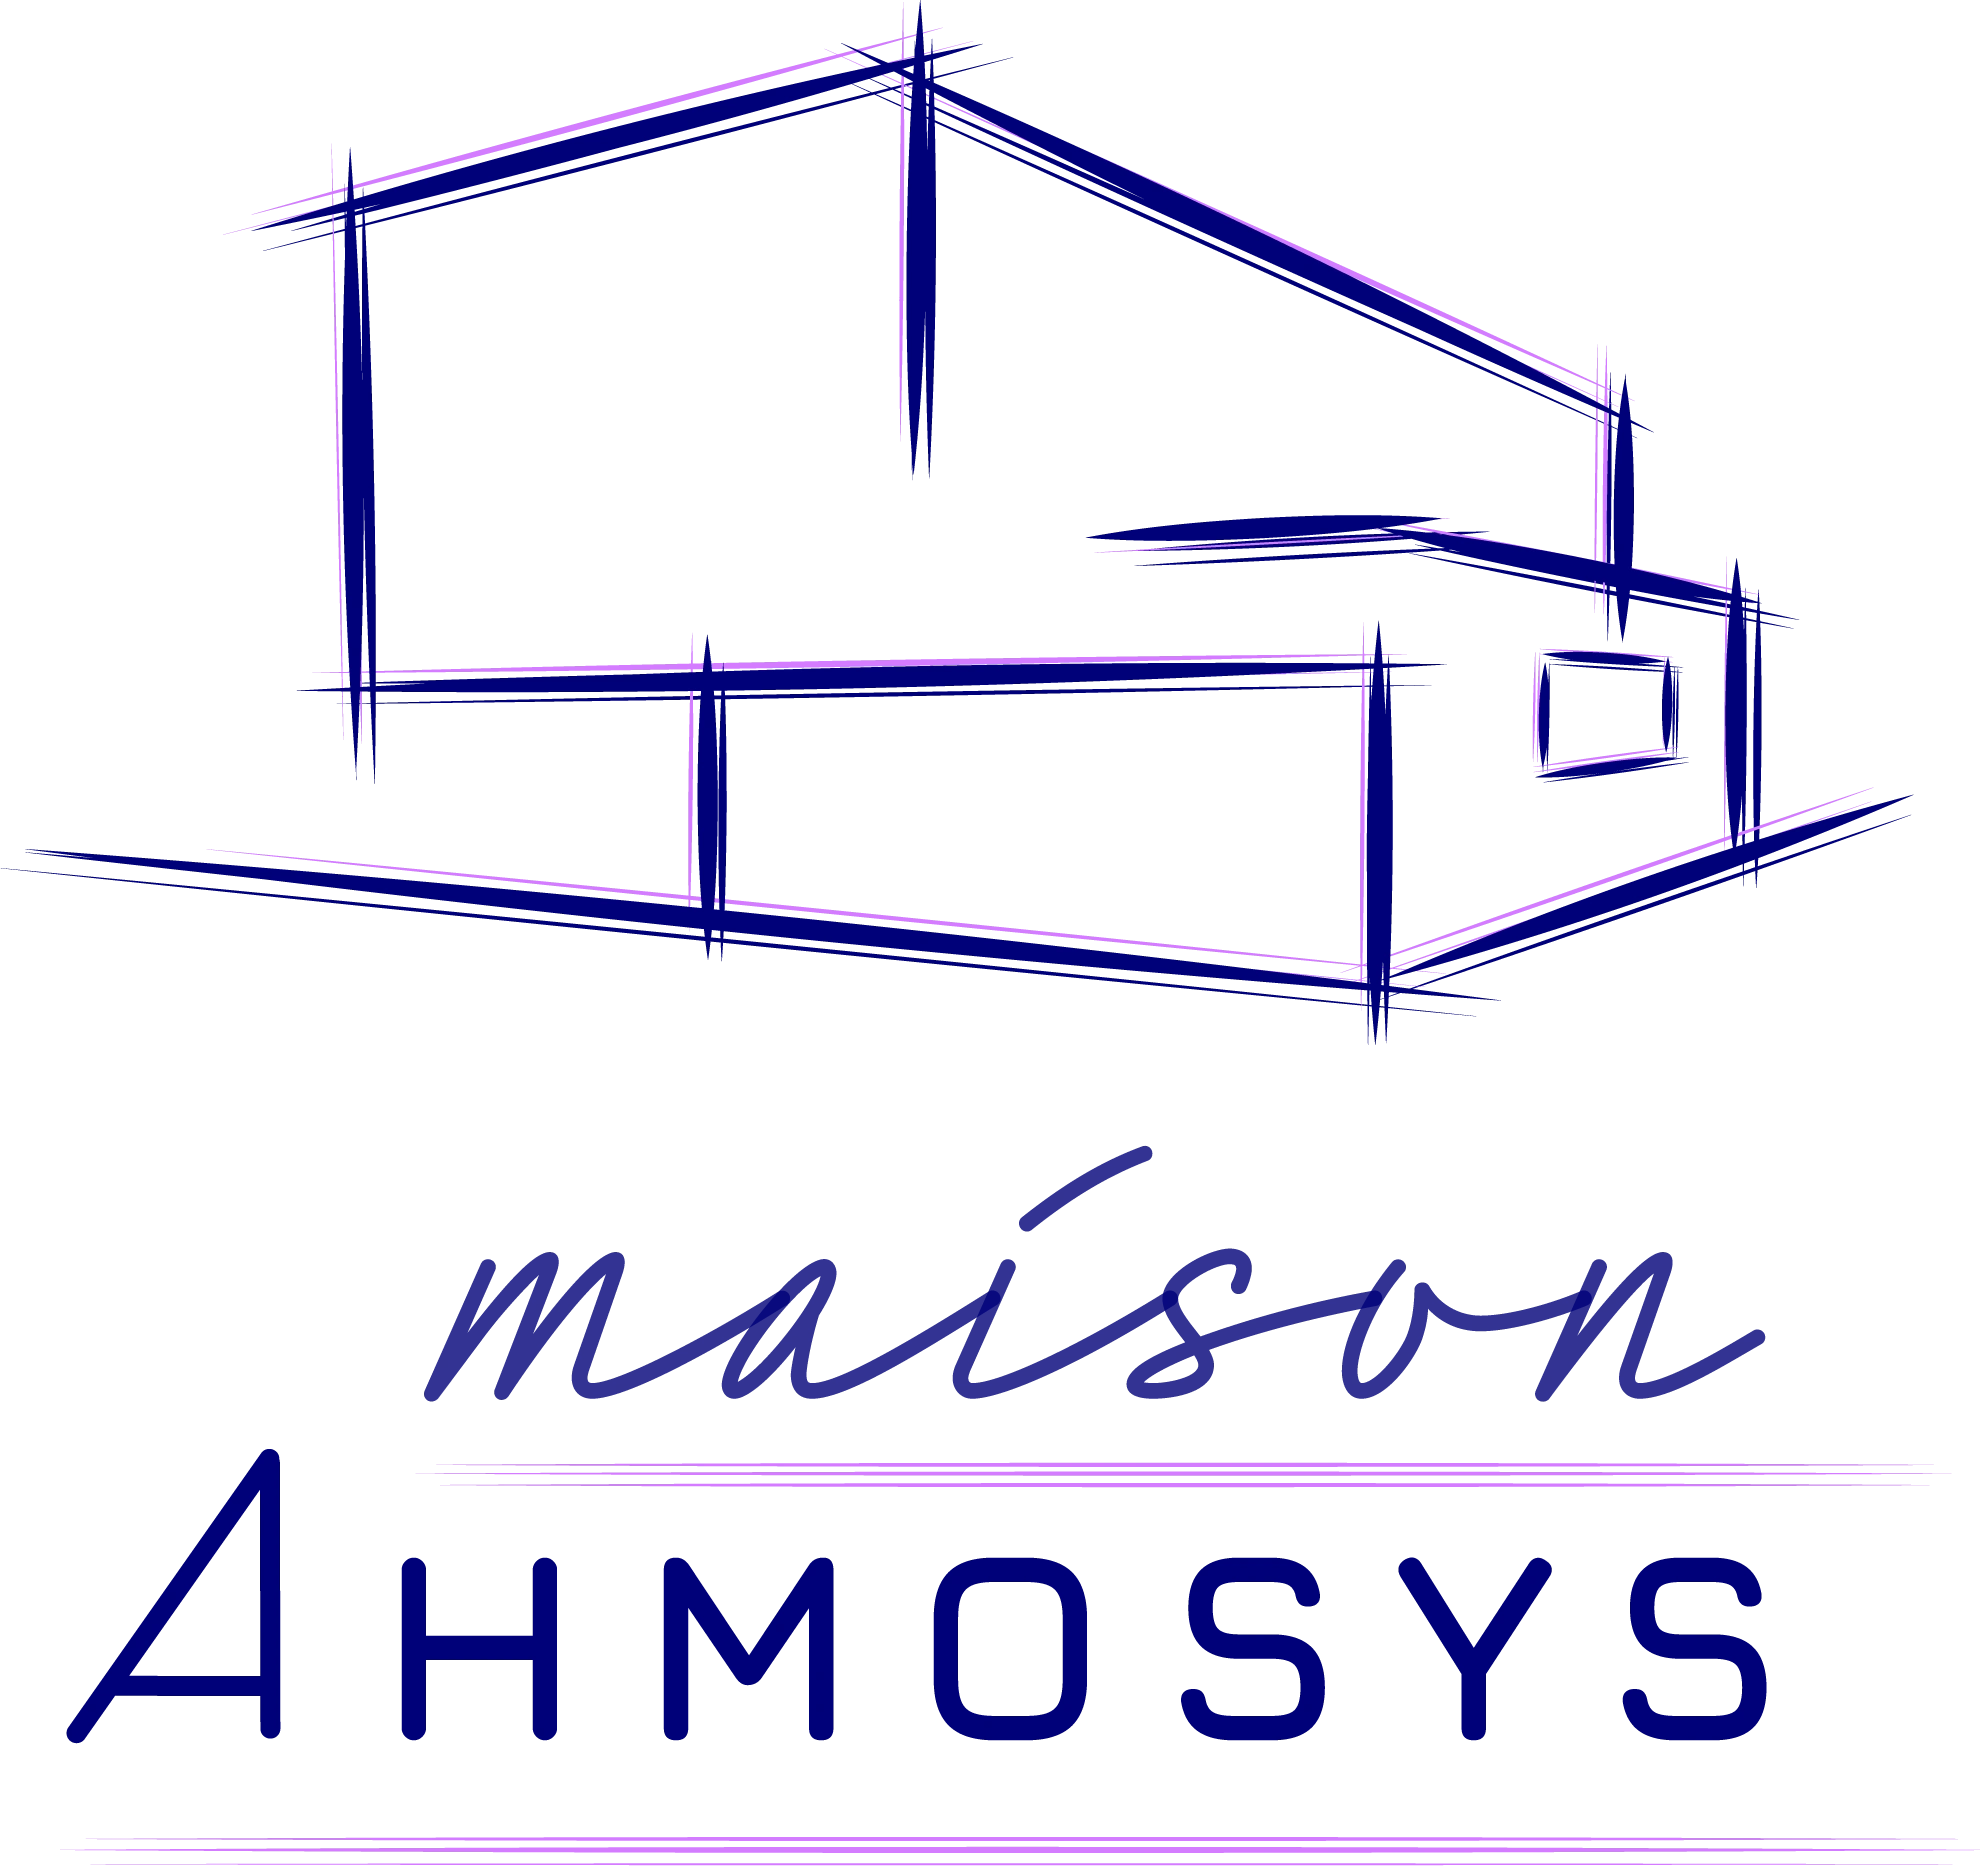 Maison Ahmosys